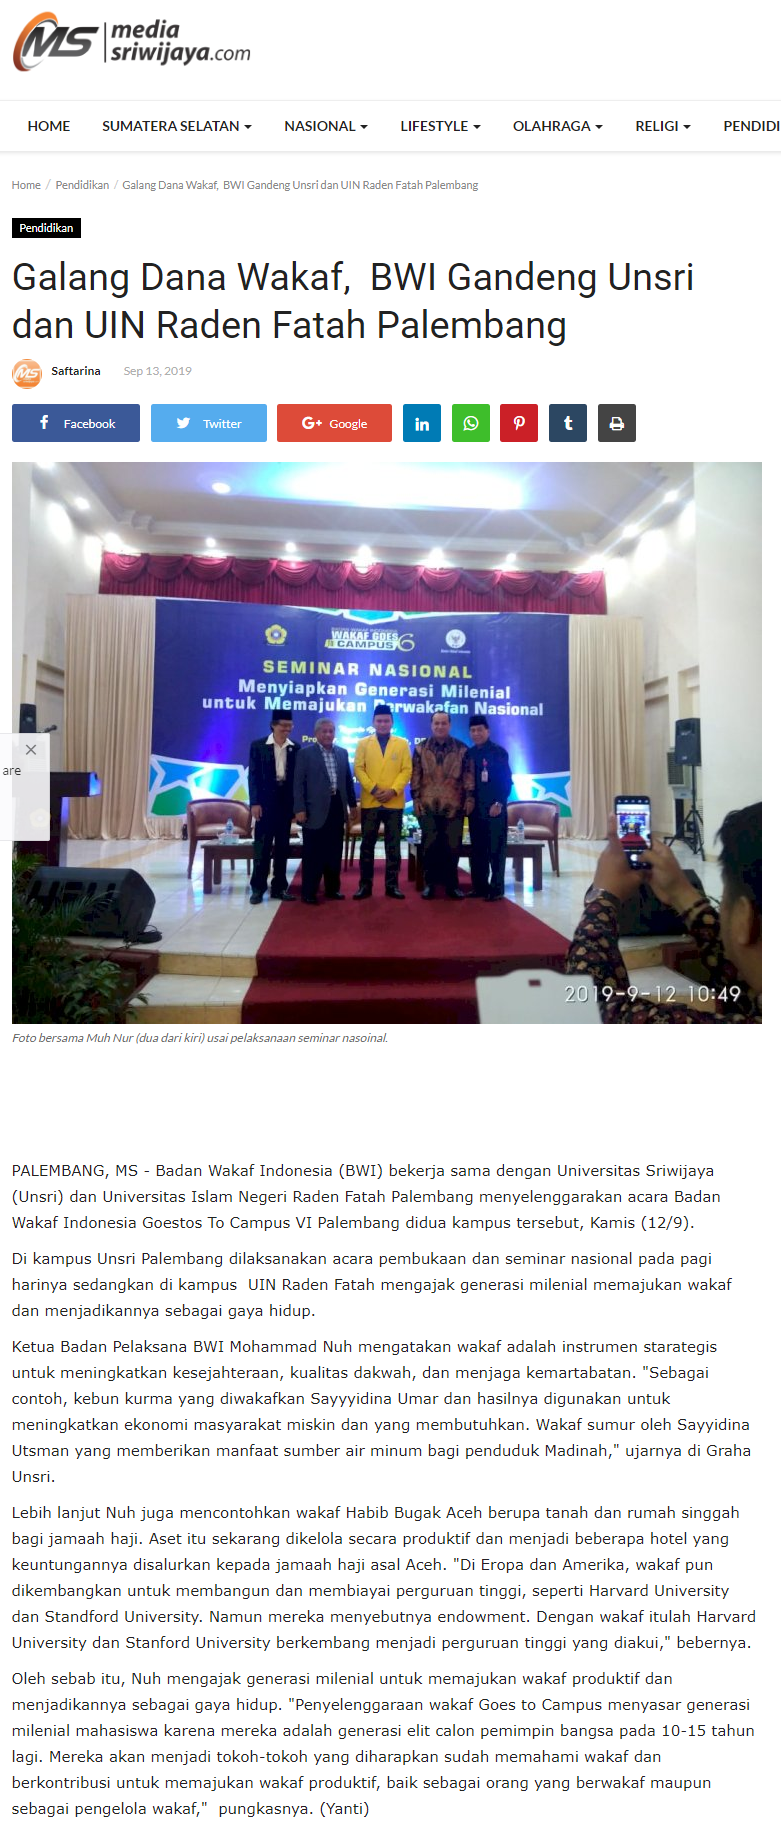 Galang Dana Wakaf, BWI Gandeng Unsri, dan UIN Raden Fatah Palembang  - screenshot www - Galang Dana Wakaf, BWI Gandeng Unsri, dan UIN Raden Fatah Palembang